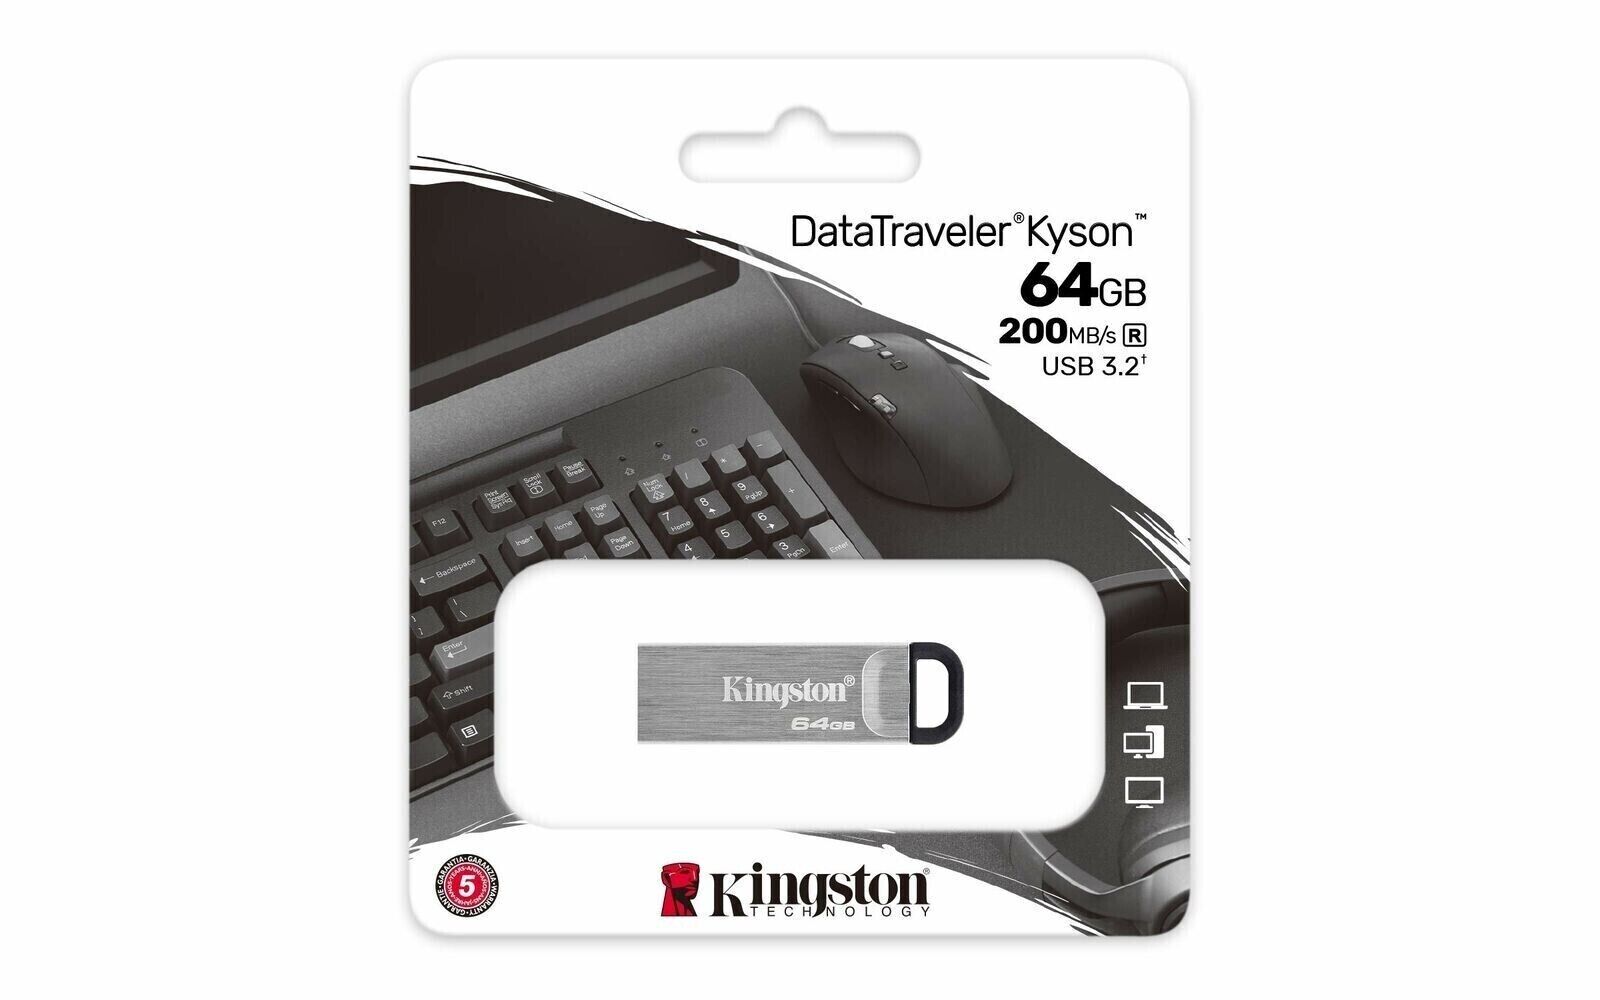 Kingston DataTraveler Kyson 64GB USB 3.2 Flash Drive